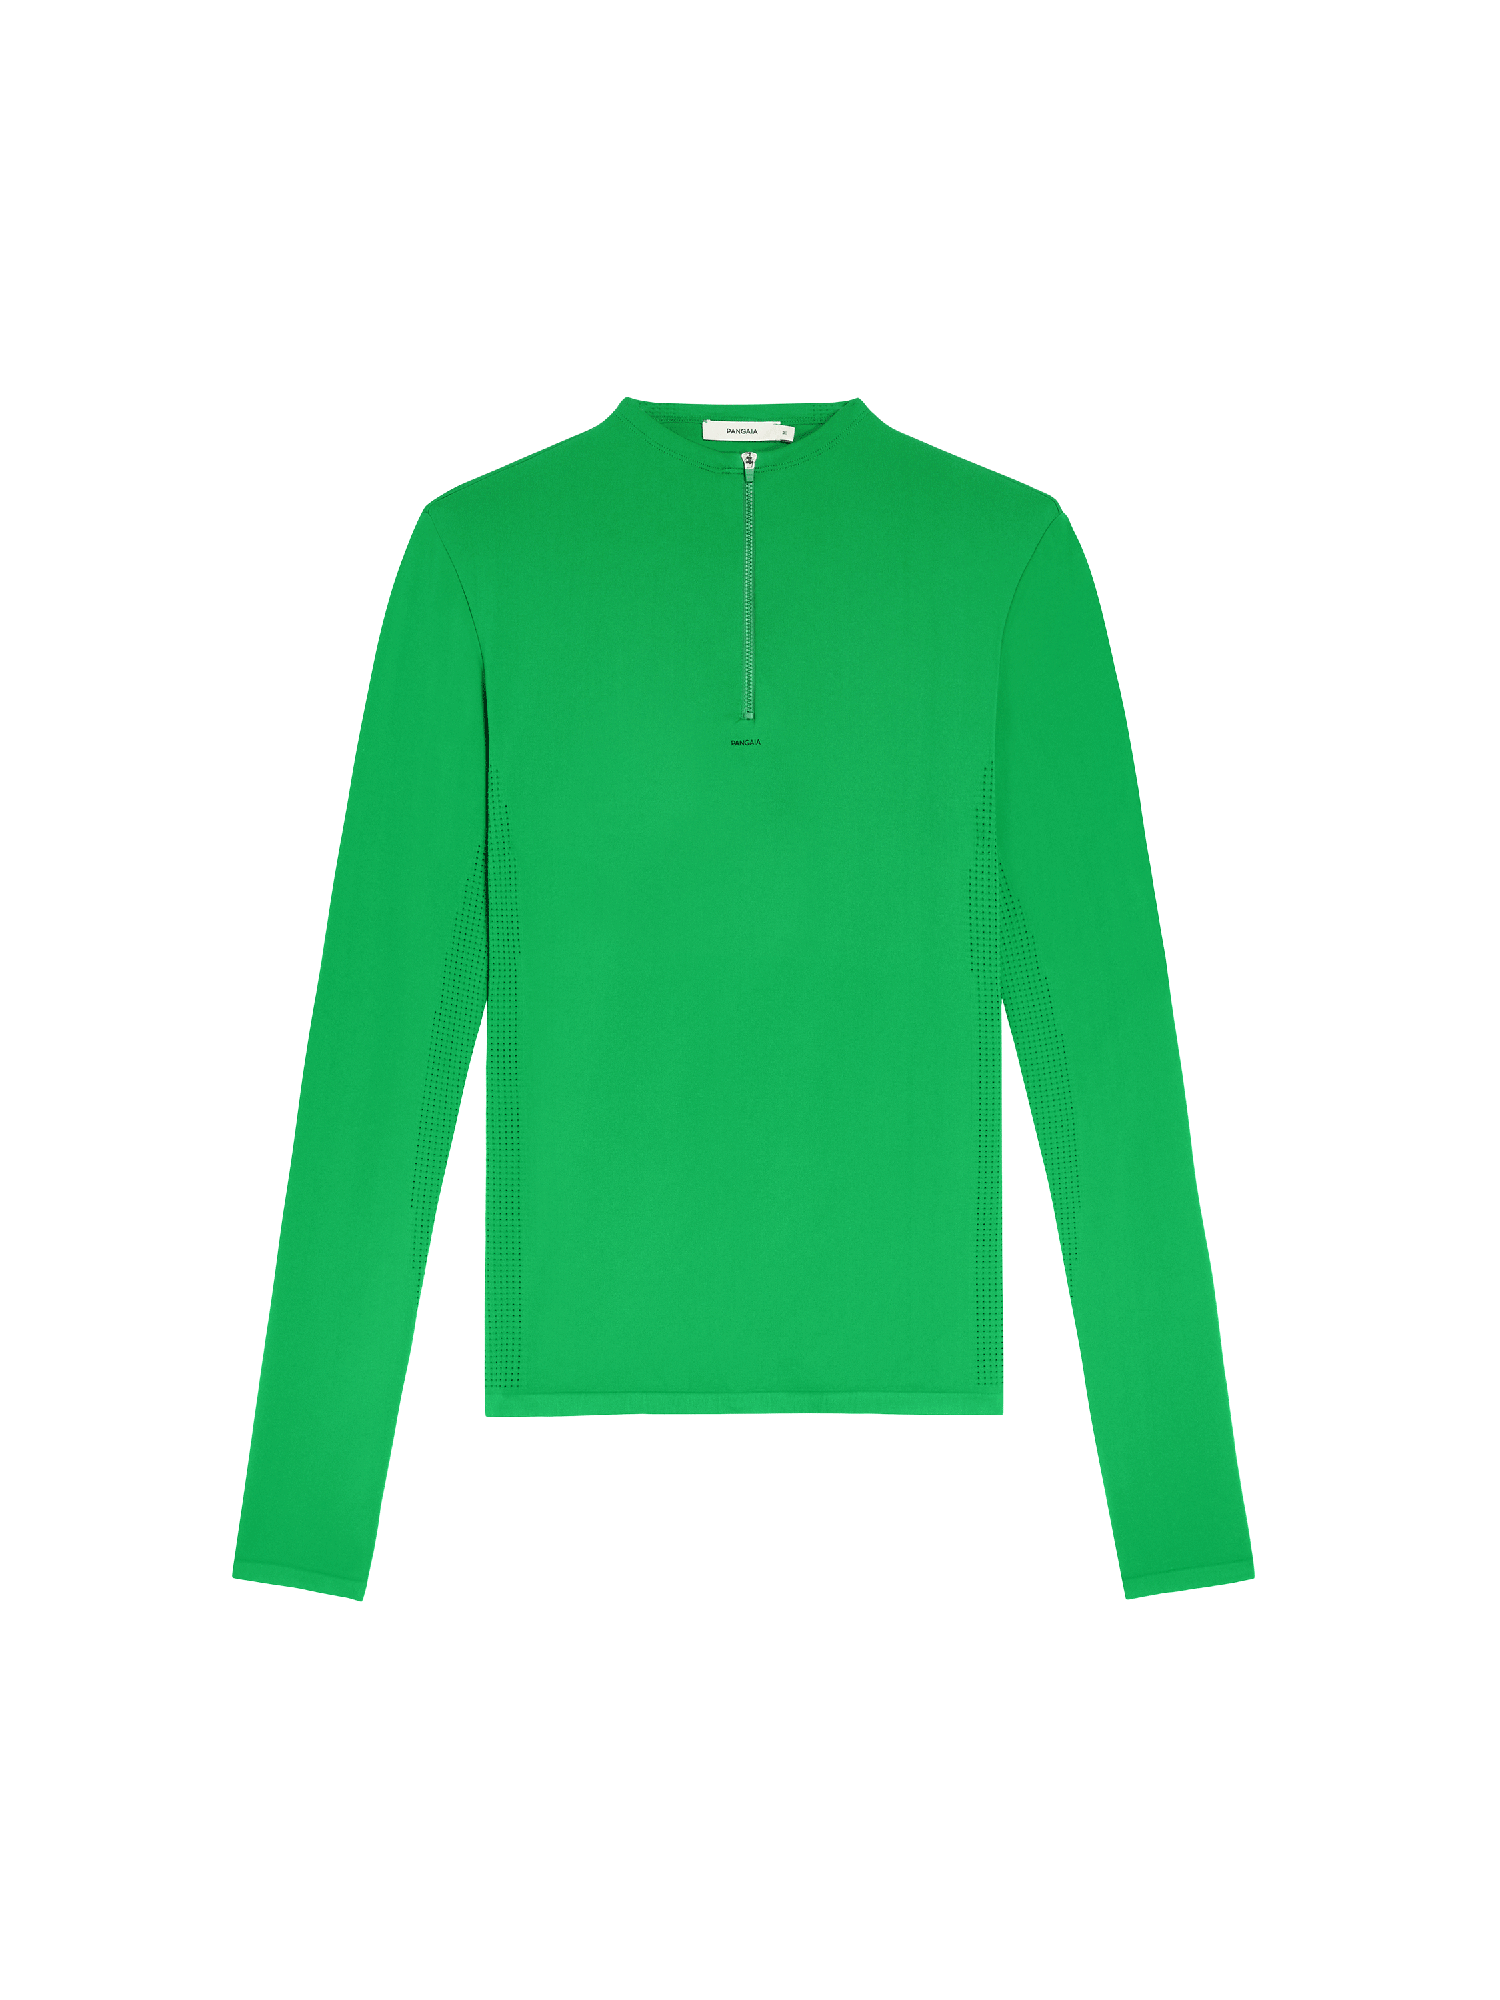 Men’s Activewear Zipped Long Sleeve Shirt 2.0—jade green-packshot-3